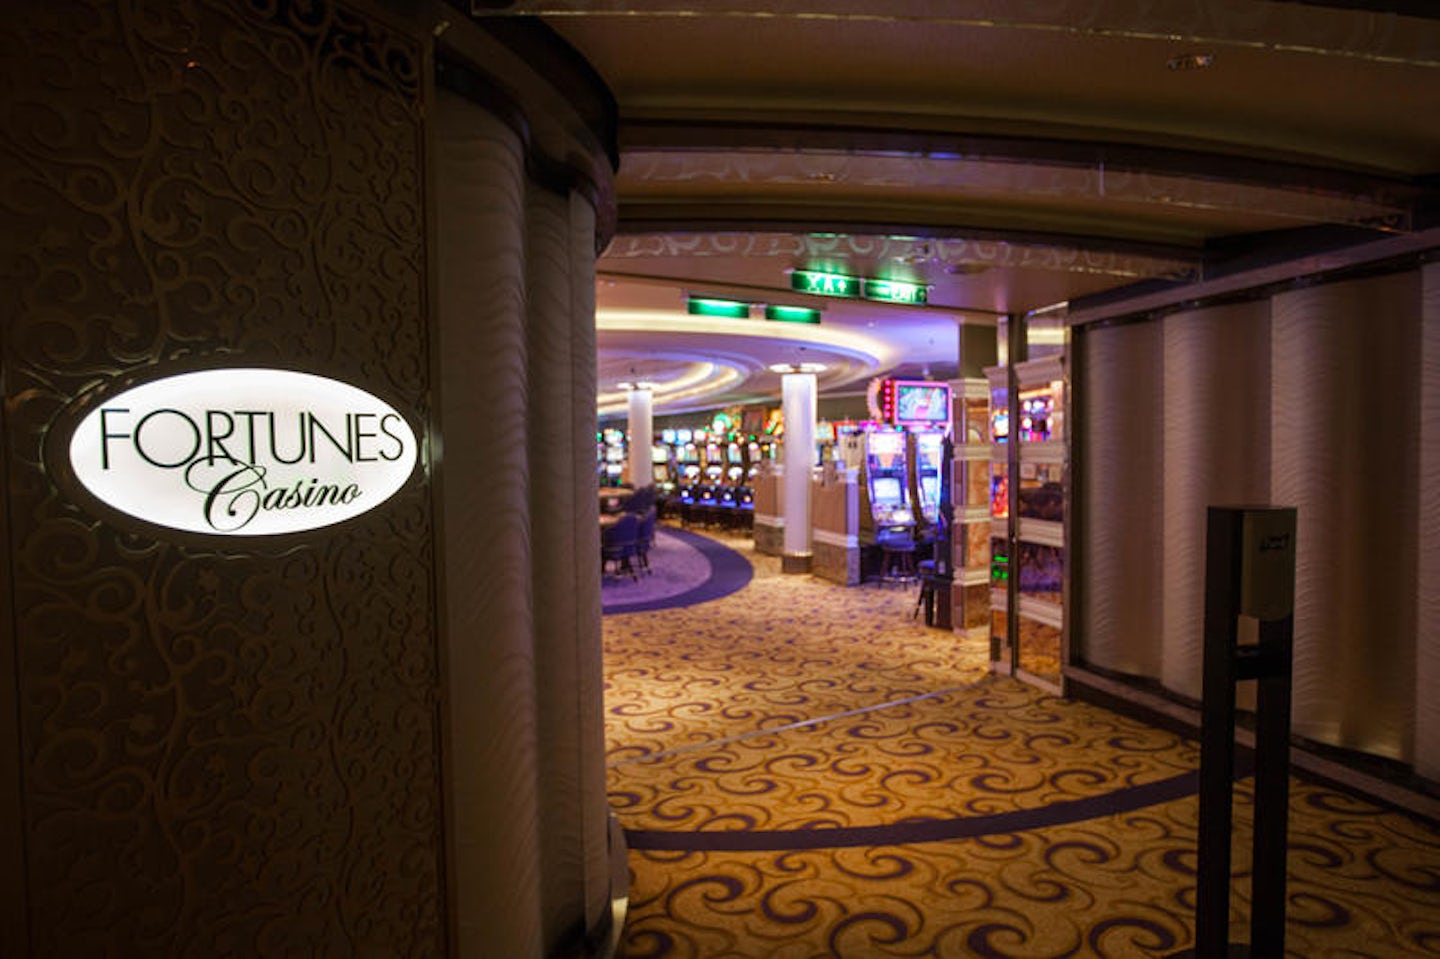 Fortunes Casino on Celebrity Equinox